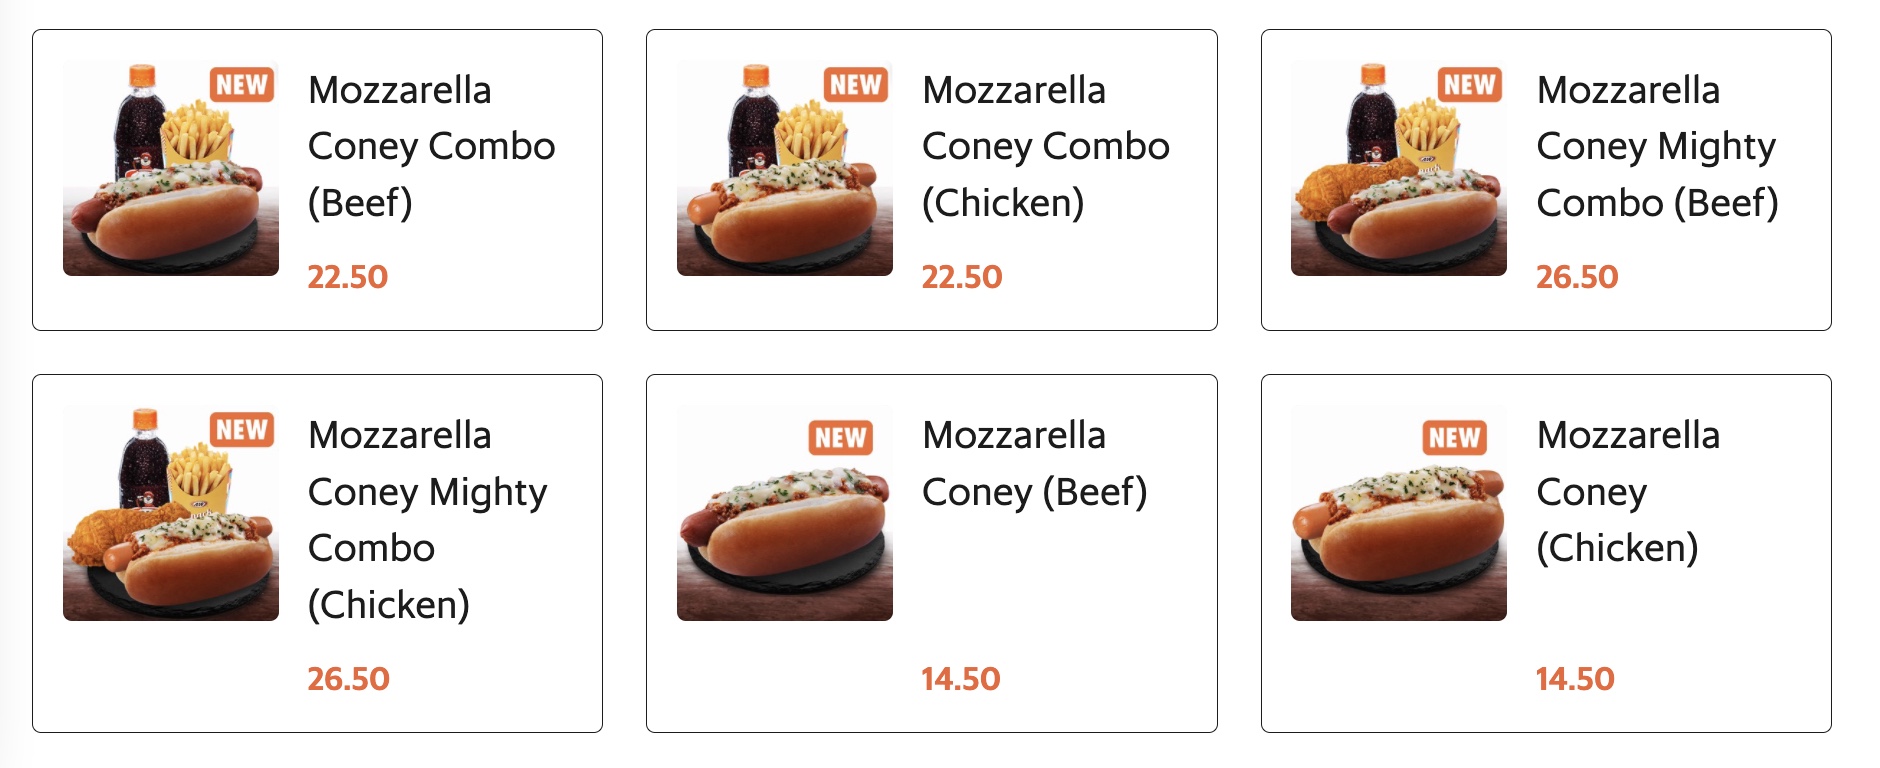 Mozzarella Coney A W Malaysia